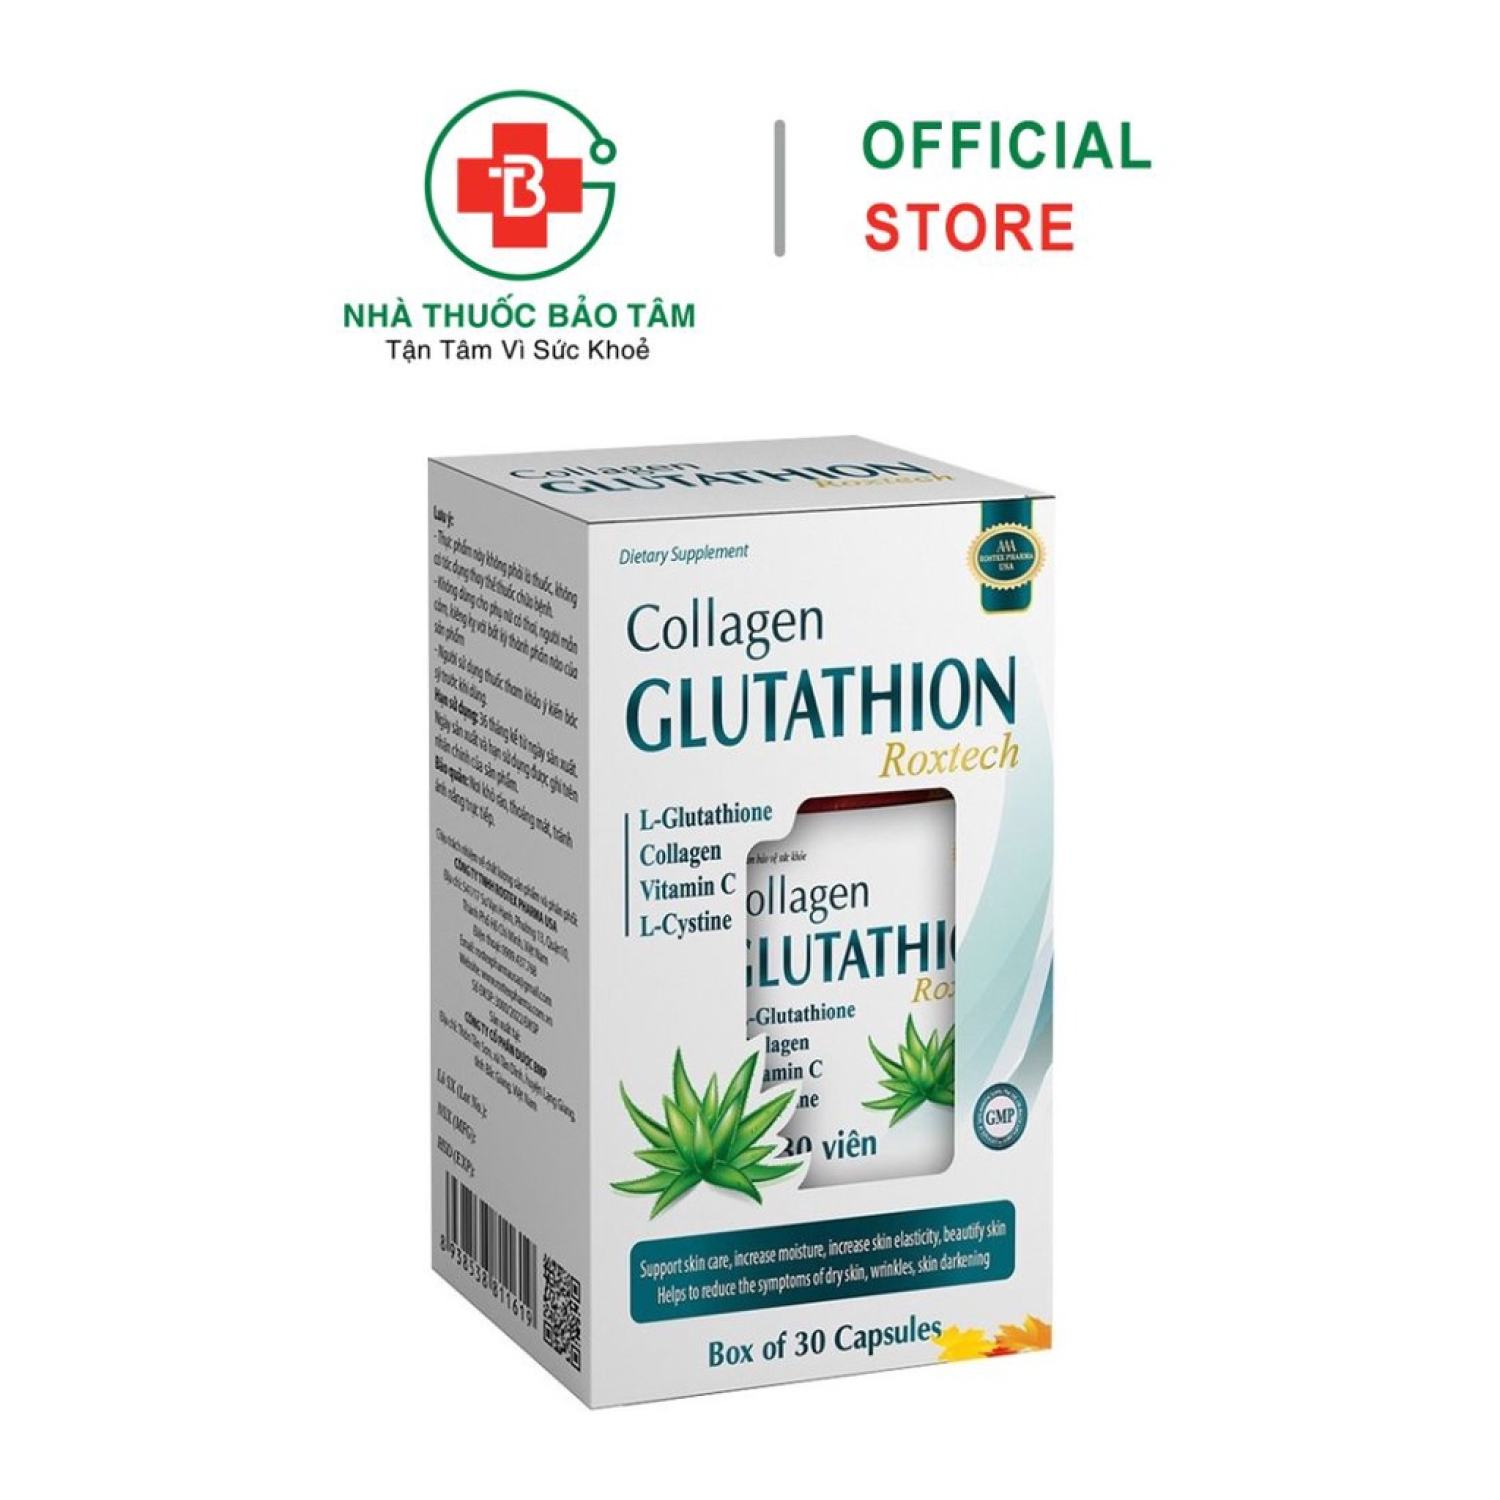 Collagen Glutathion ROXTECH, l-cystine, vitamin E C đẹp sáng da